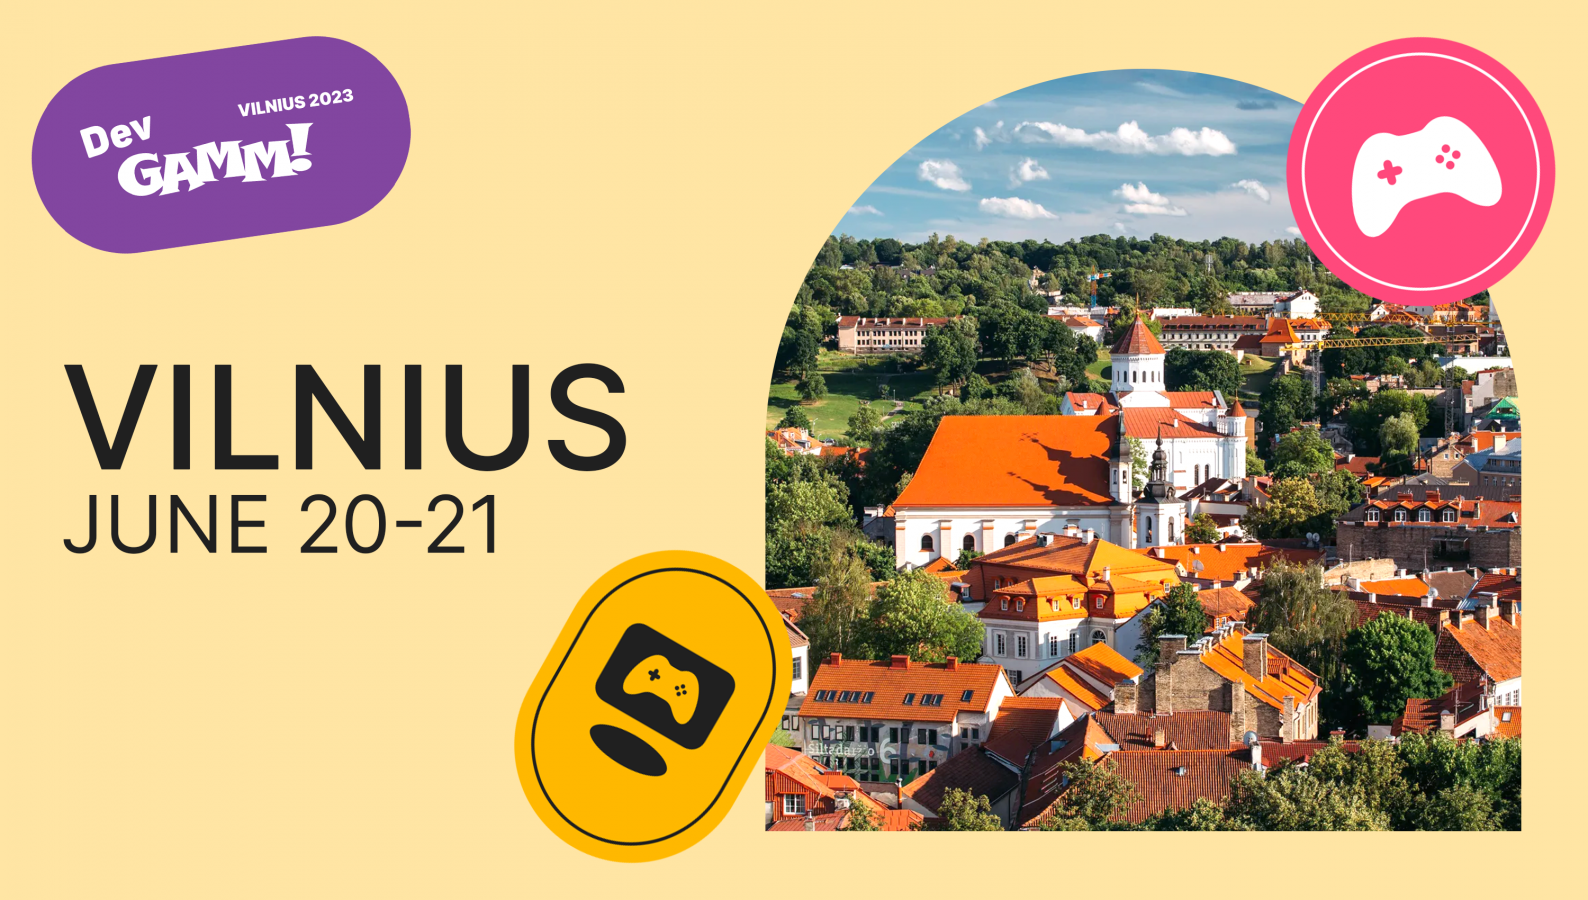 DevGAMM Vilnius 2023